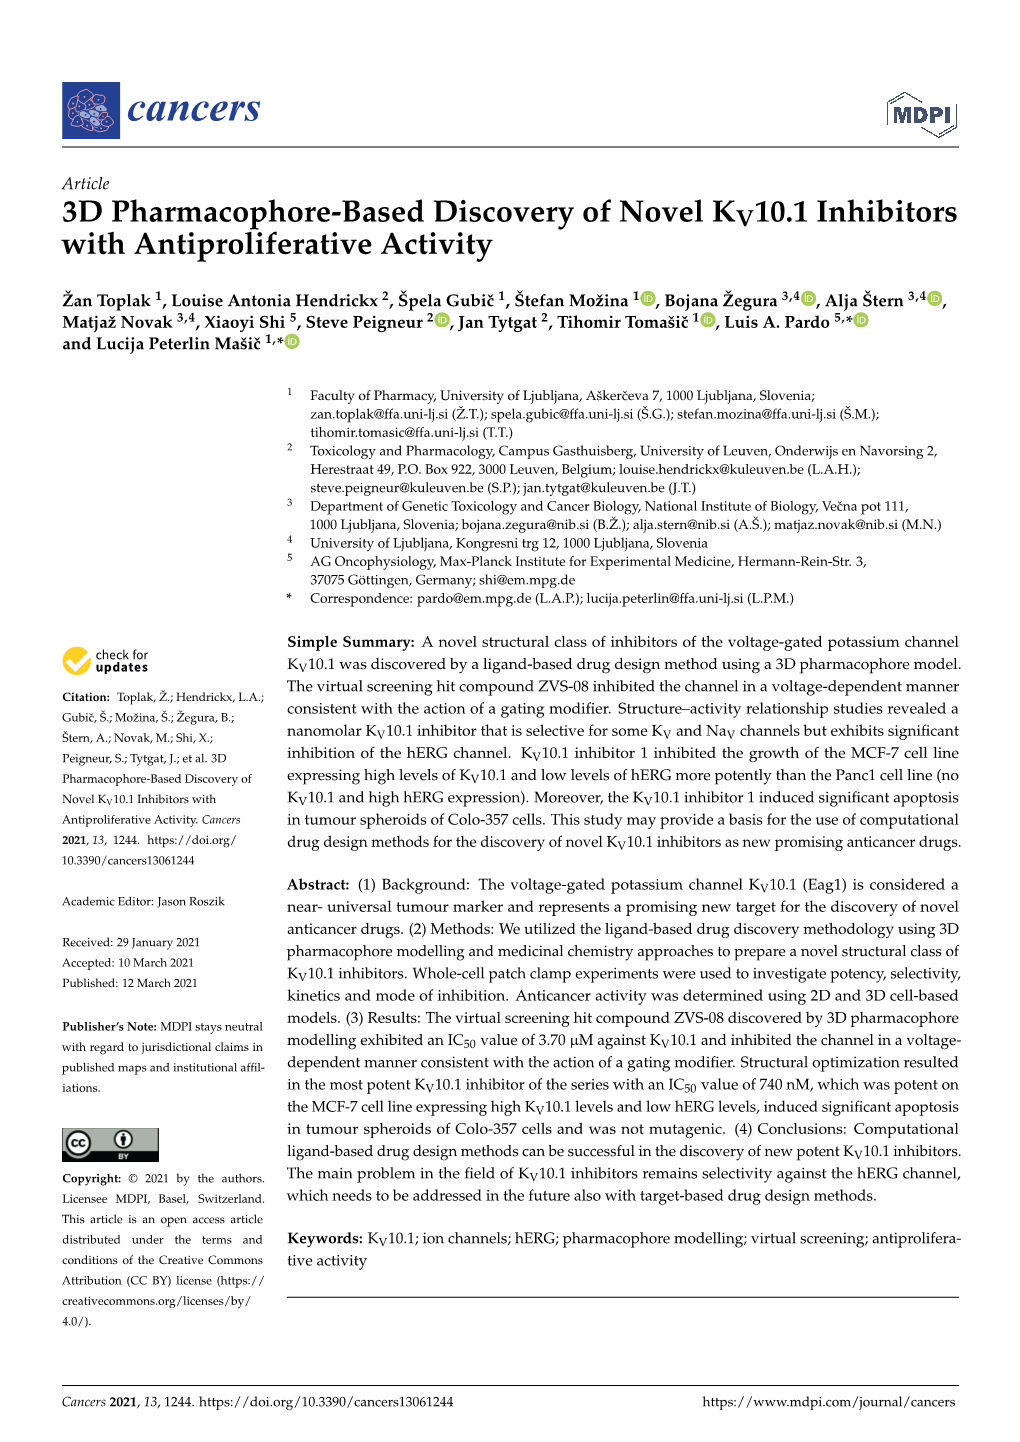 3D Pharmacophore-Based Discovery of Novel KV10.1 Inhibitors with Antiproliferative Activity